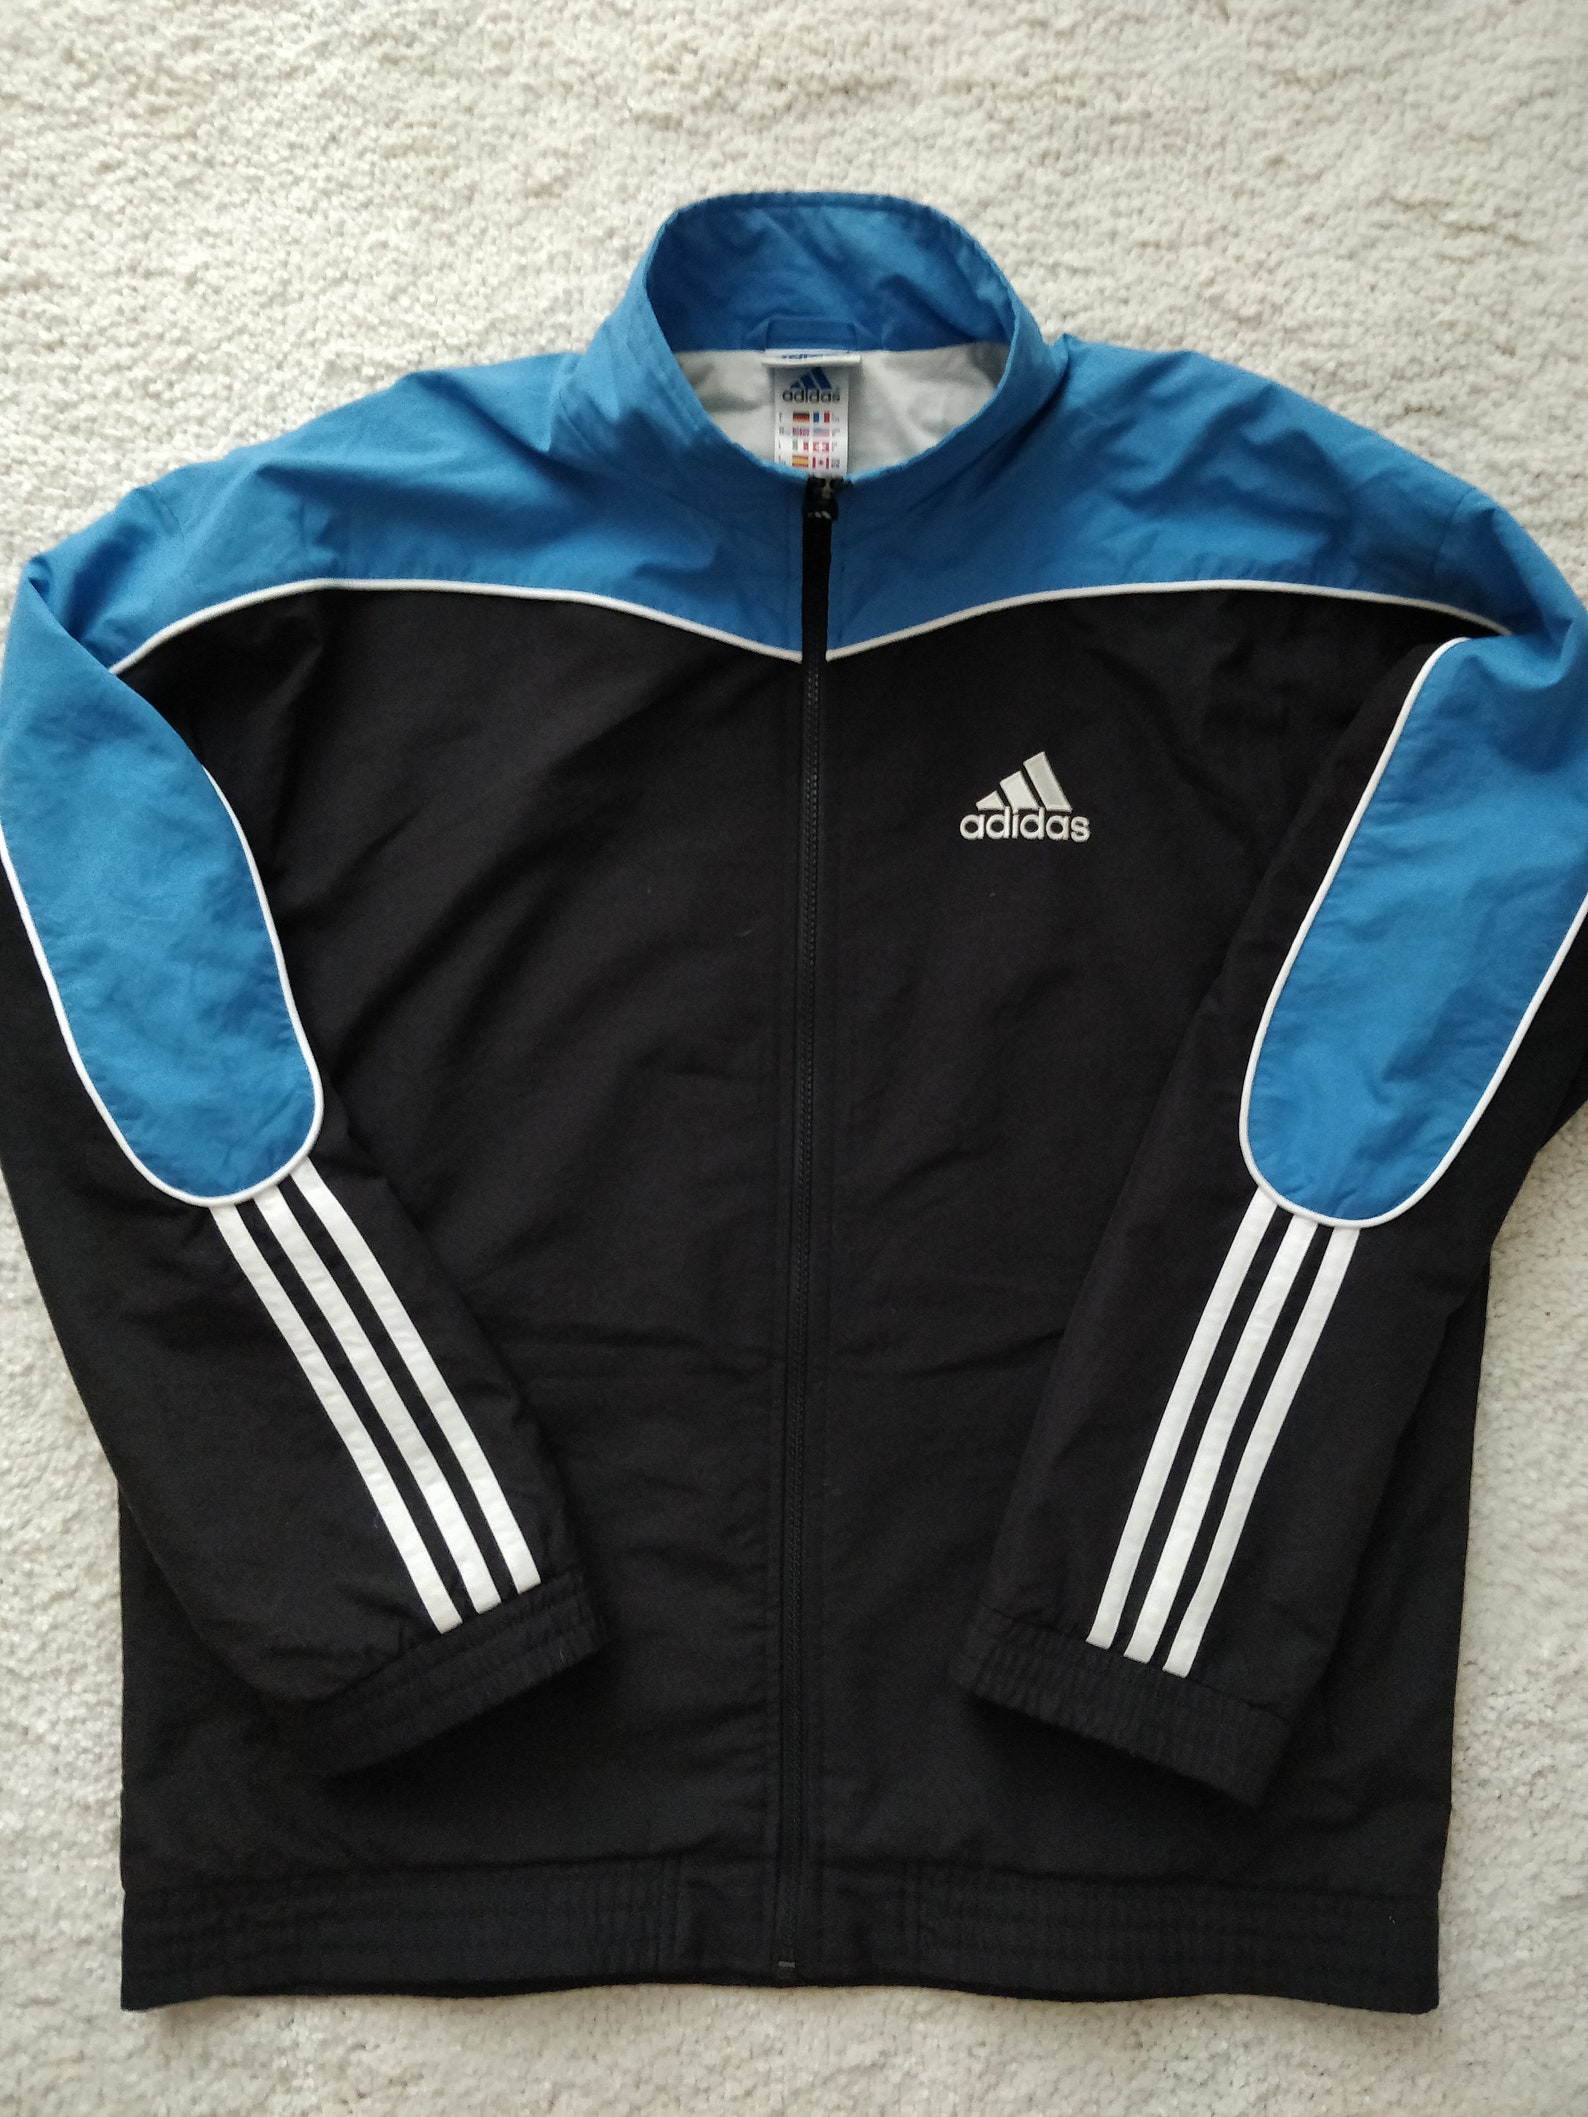 Adidas 90's Vintage Mens Tracksuit Top Jacket Black Blue | Etsy